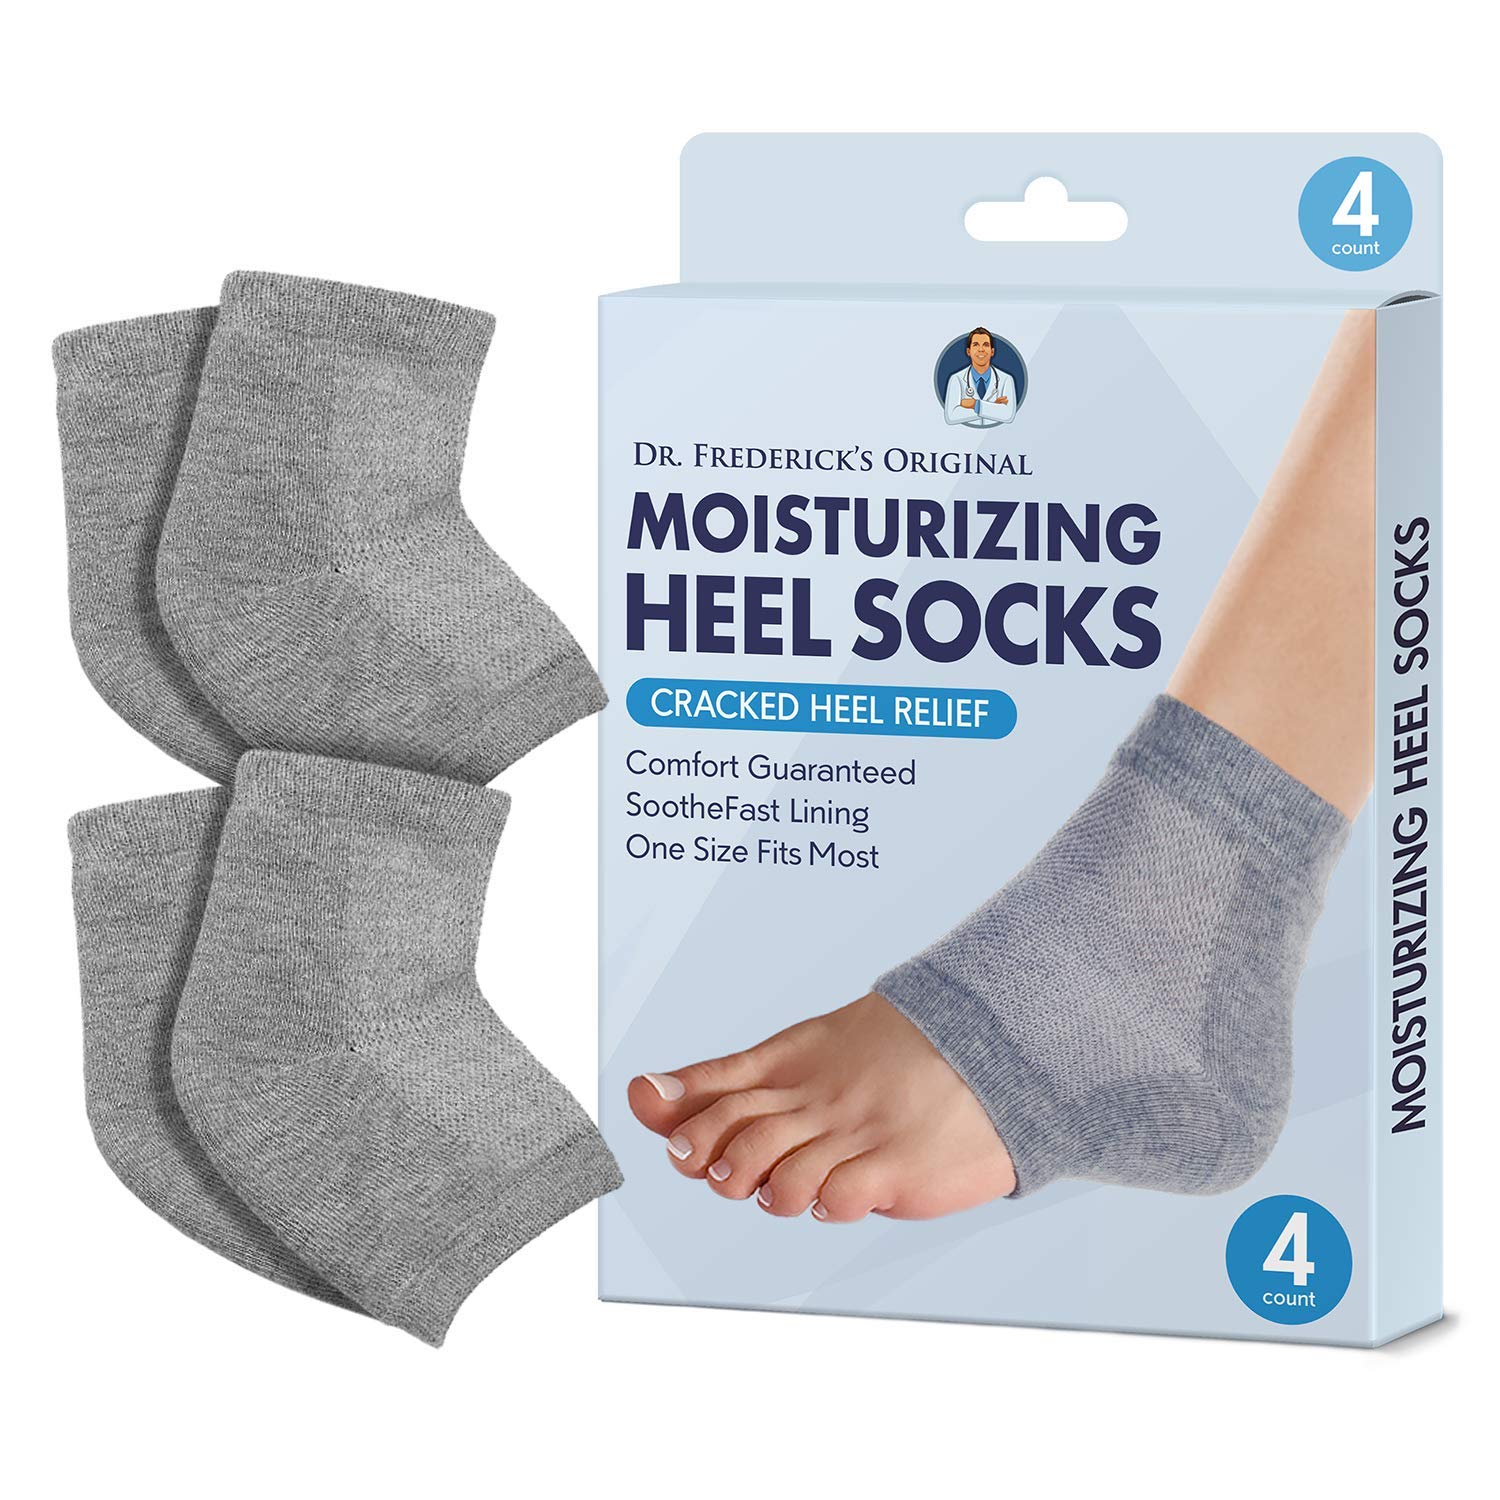 Dr. Frederick’s Original Moisturizing Heel Socks